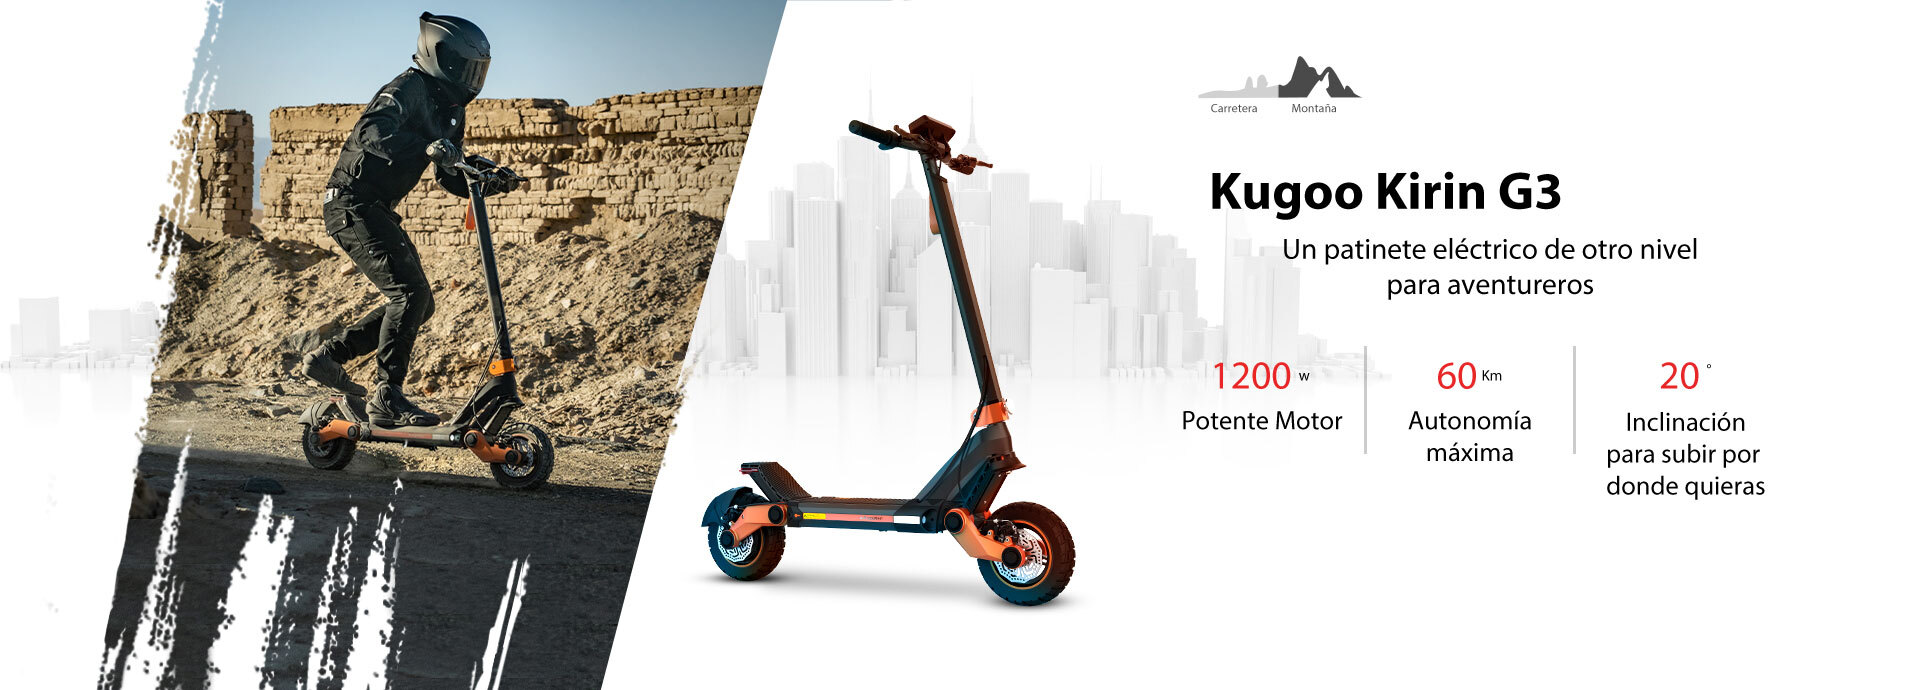 Patinete Electrico Kugoo Kirin G3 al mejor precio en Kugoo Spain